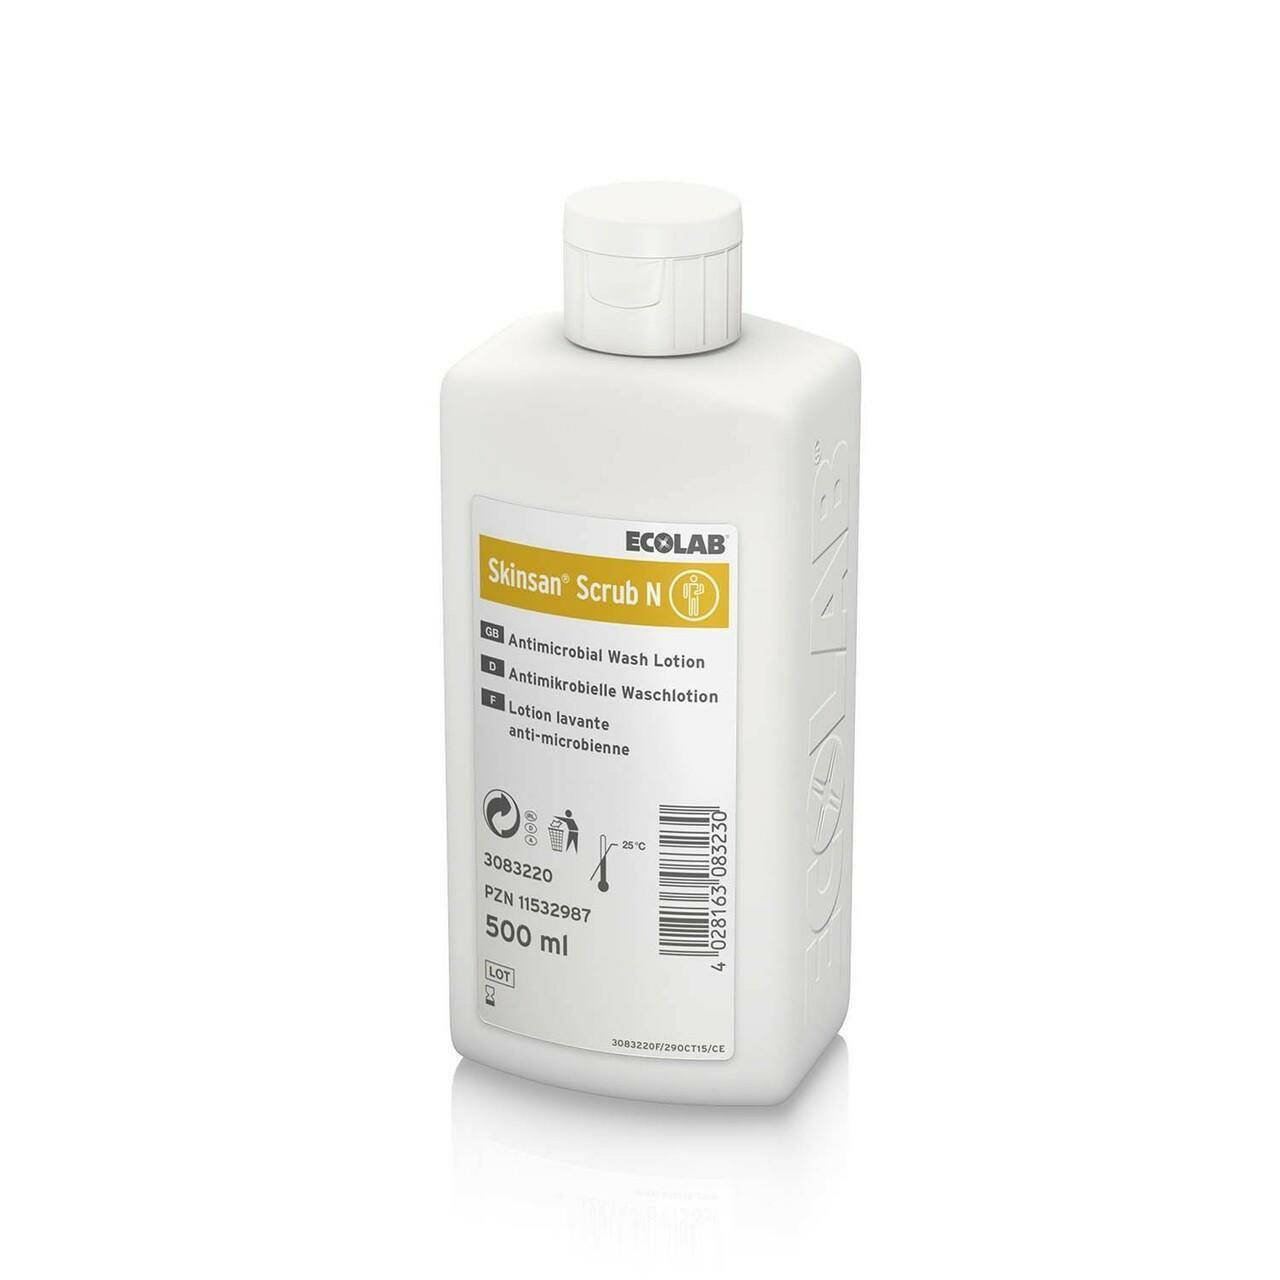 500ml Skinsan Scrub N Antimicrobial Wash Lotion - UKMEDI